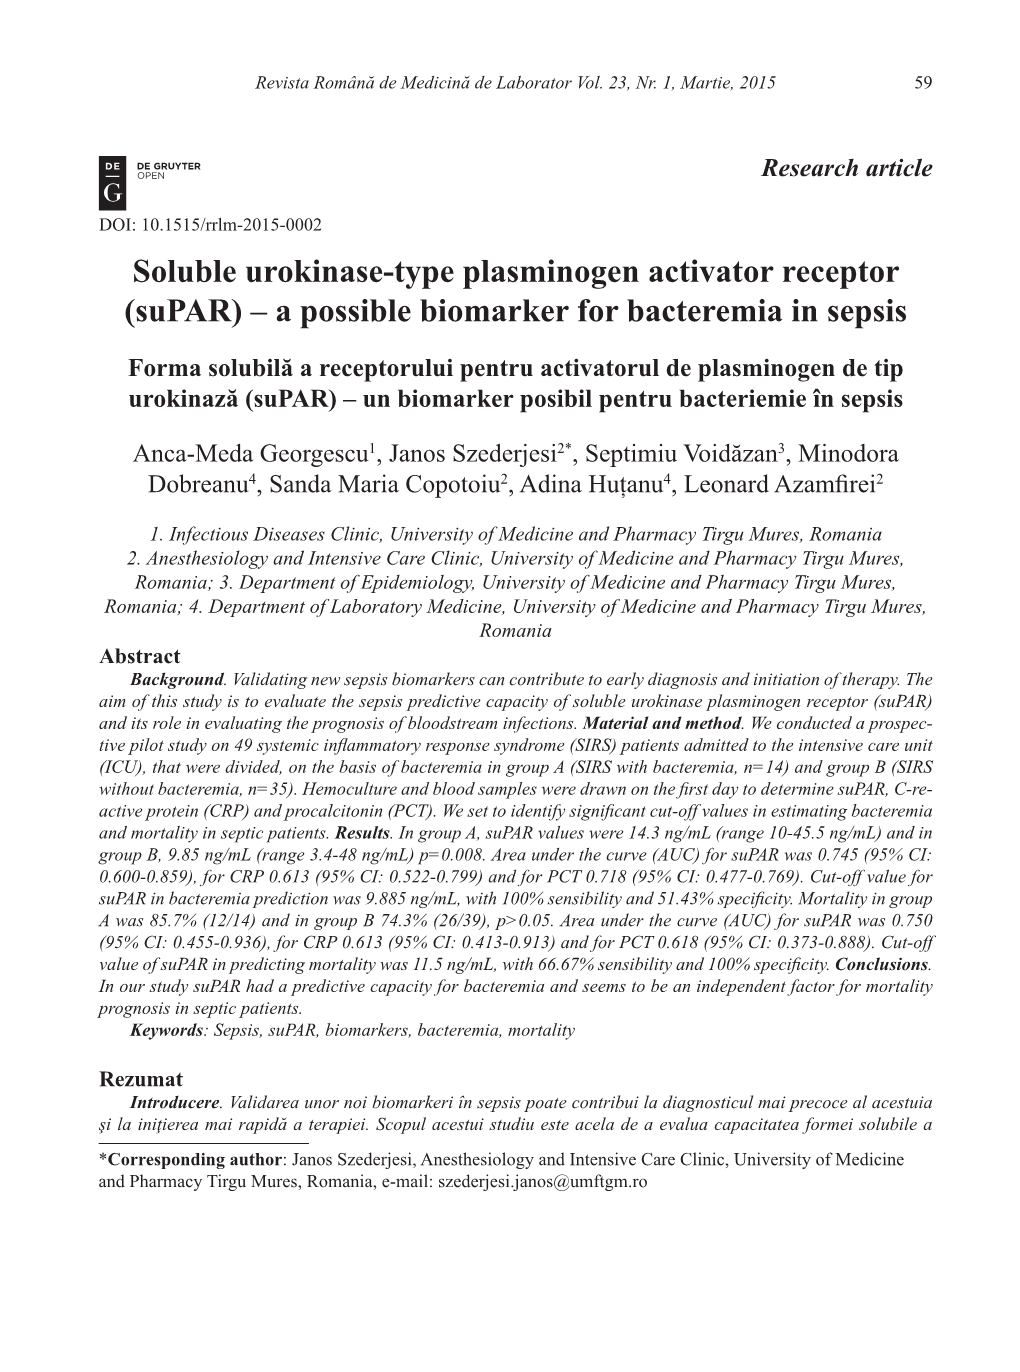 Soluble Urokinase-Type Plasminogen Activator Receptor (Supar) – a Possible Biomarker for Bacteremia in Sepsis